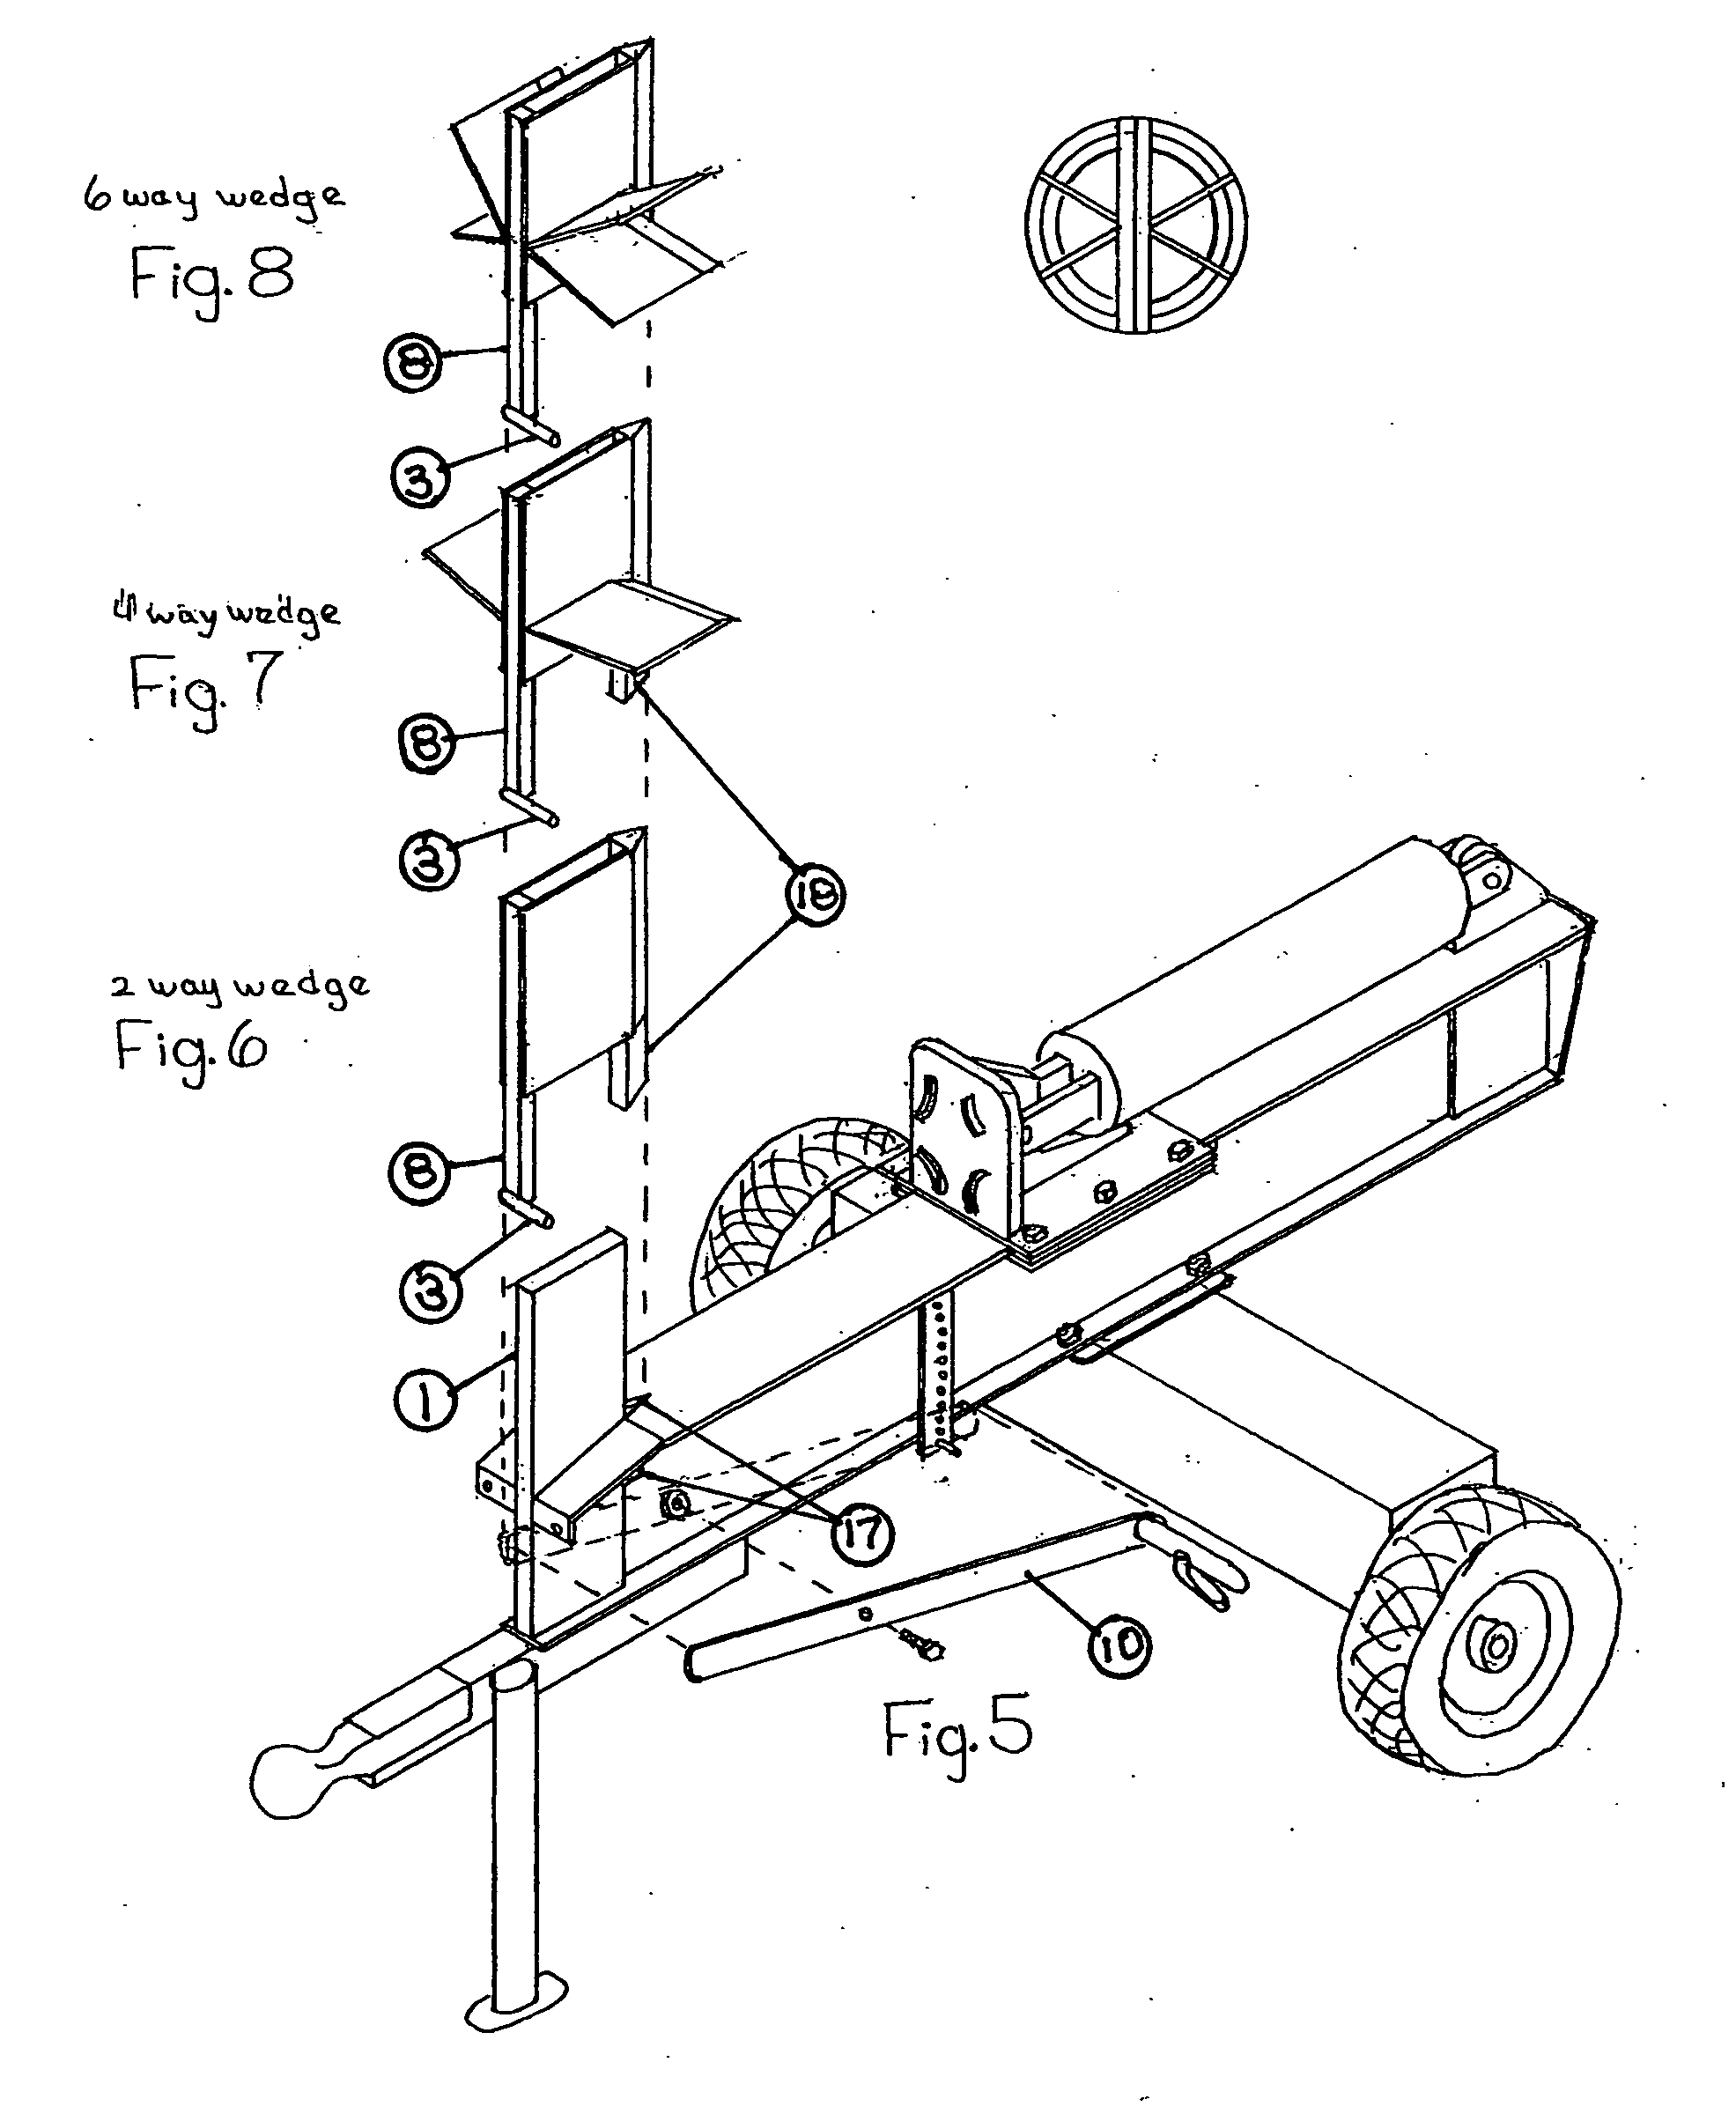 Single post convertible split wedge system